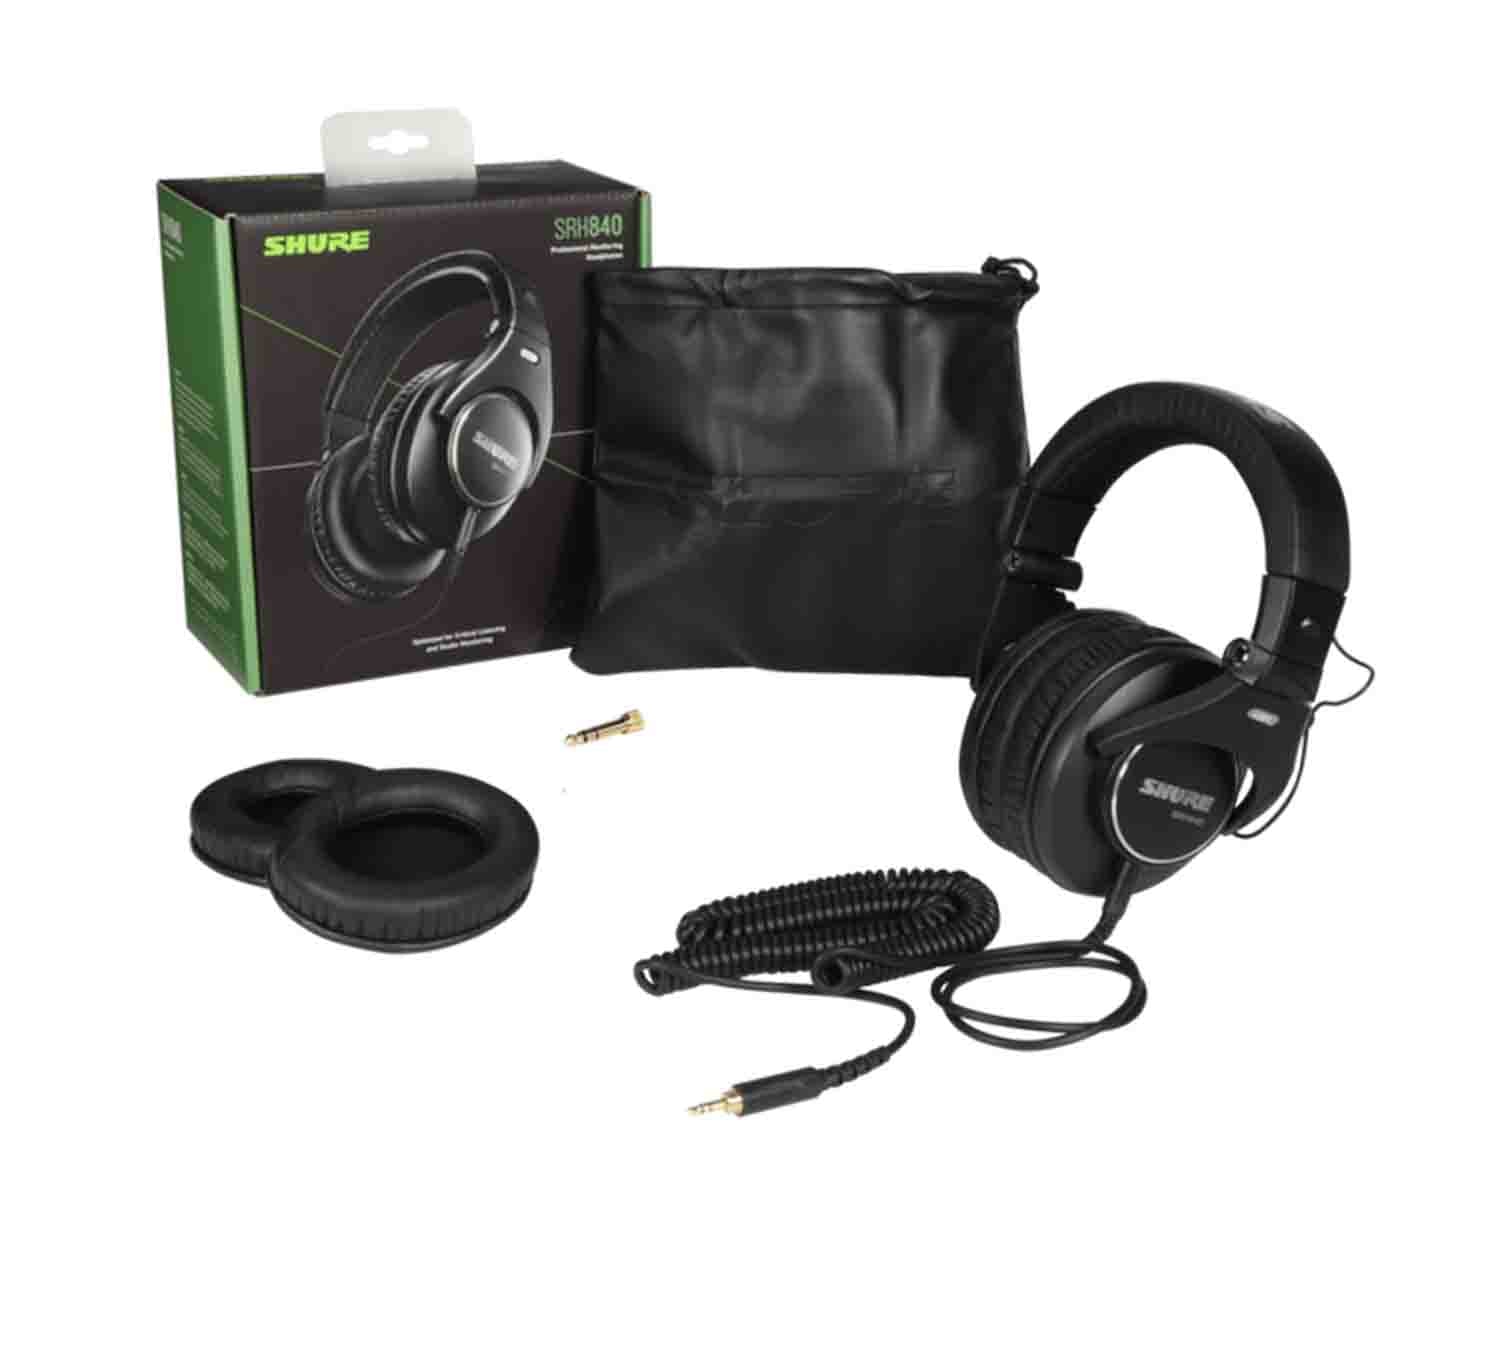 Shure SRH840-BK Professional Monitoring Headphones - Black - Hollywood DJ